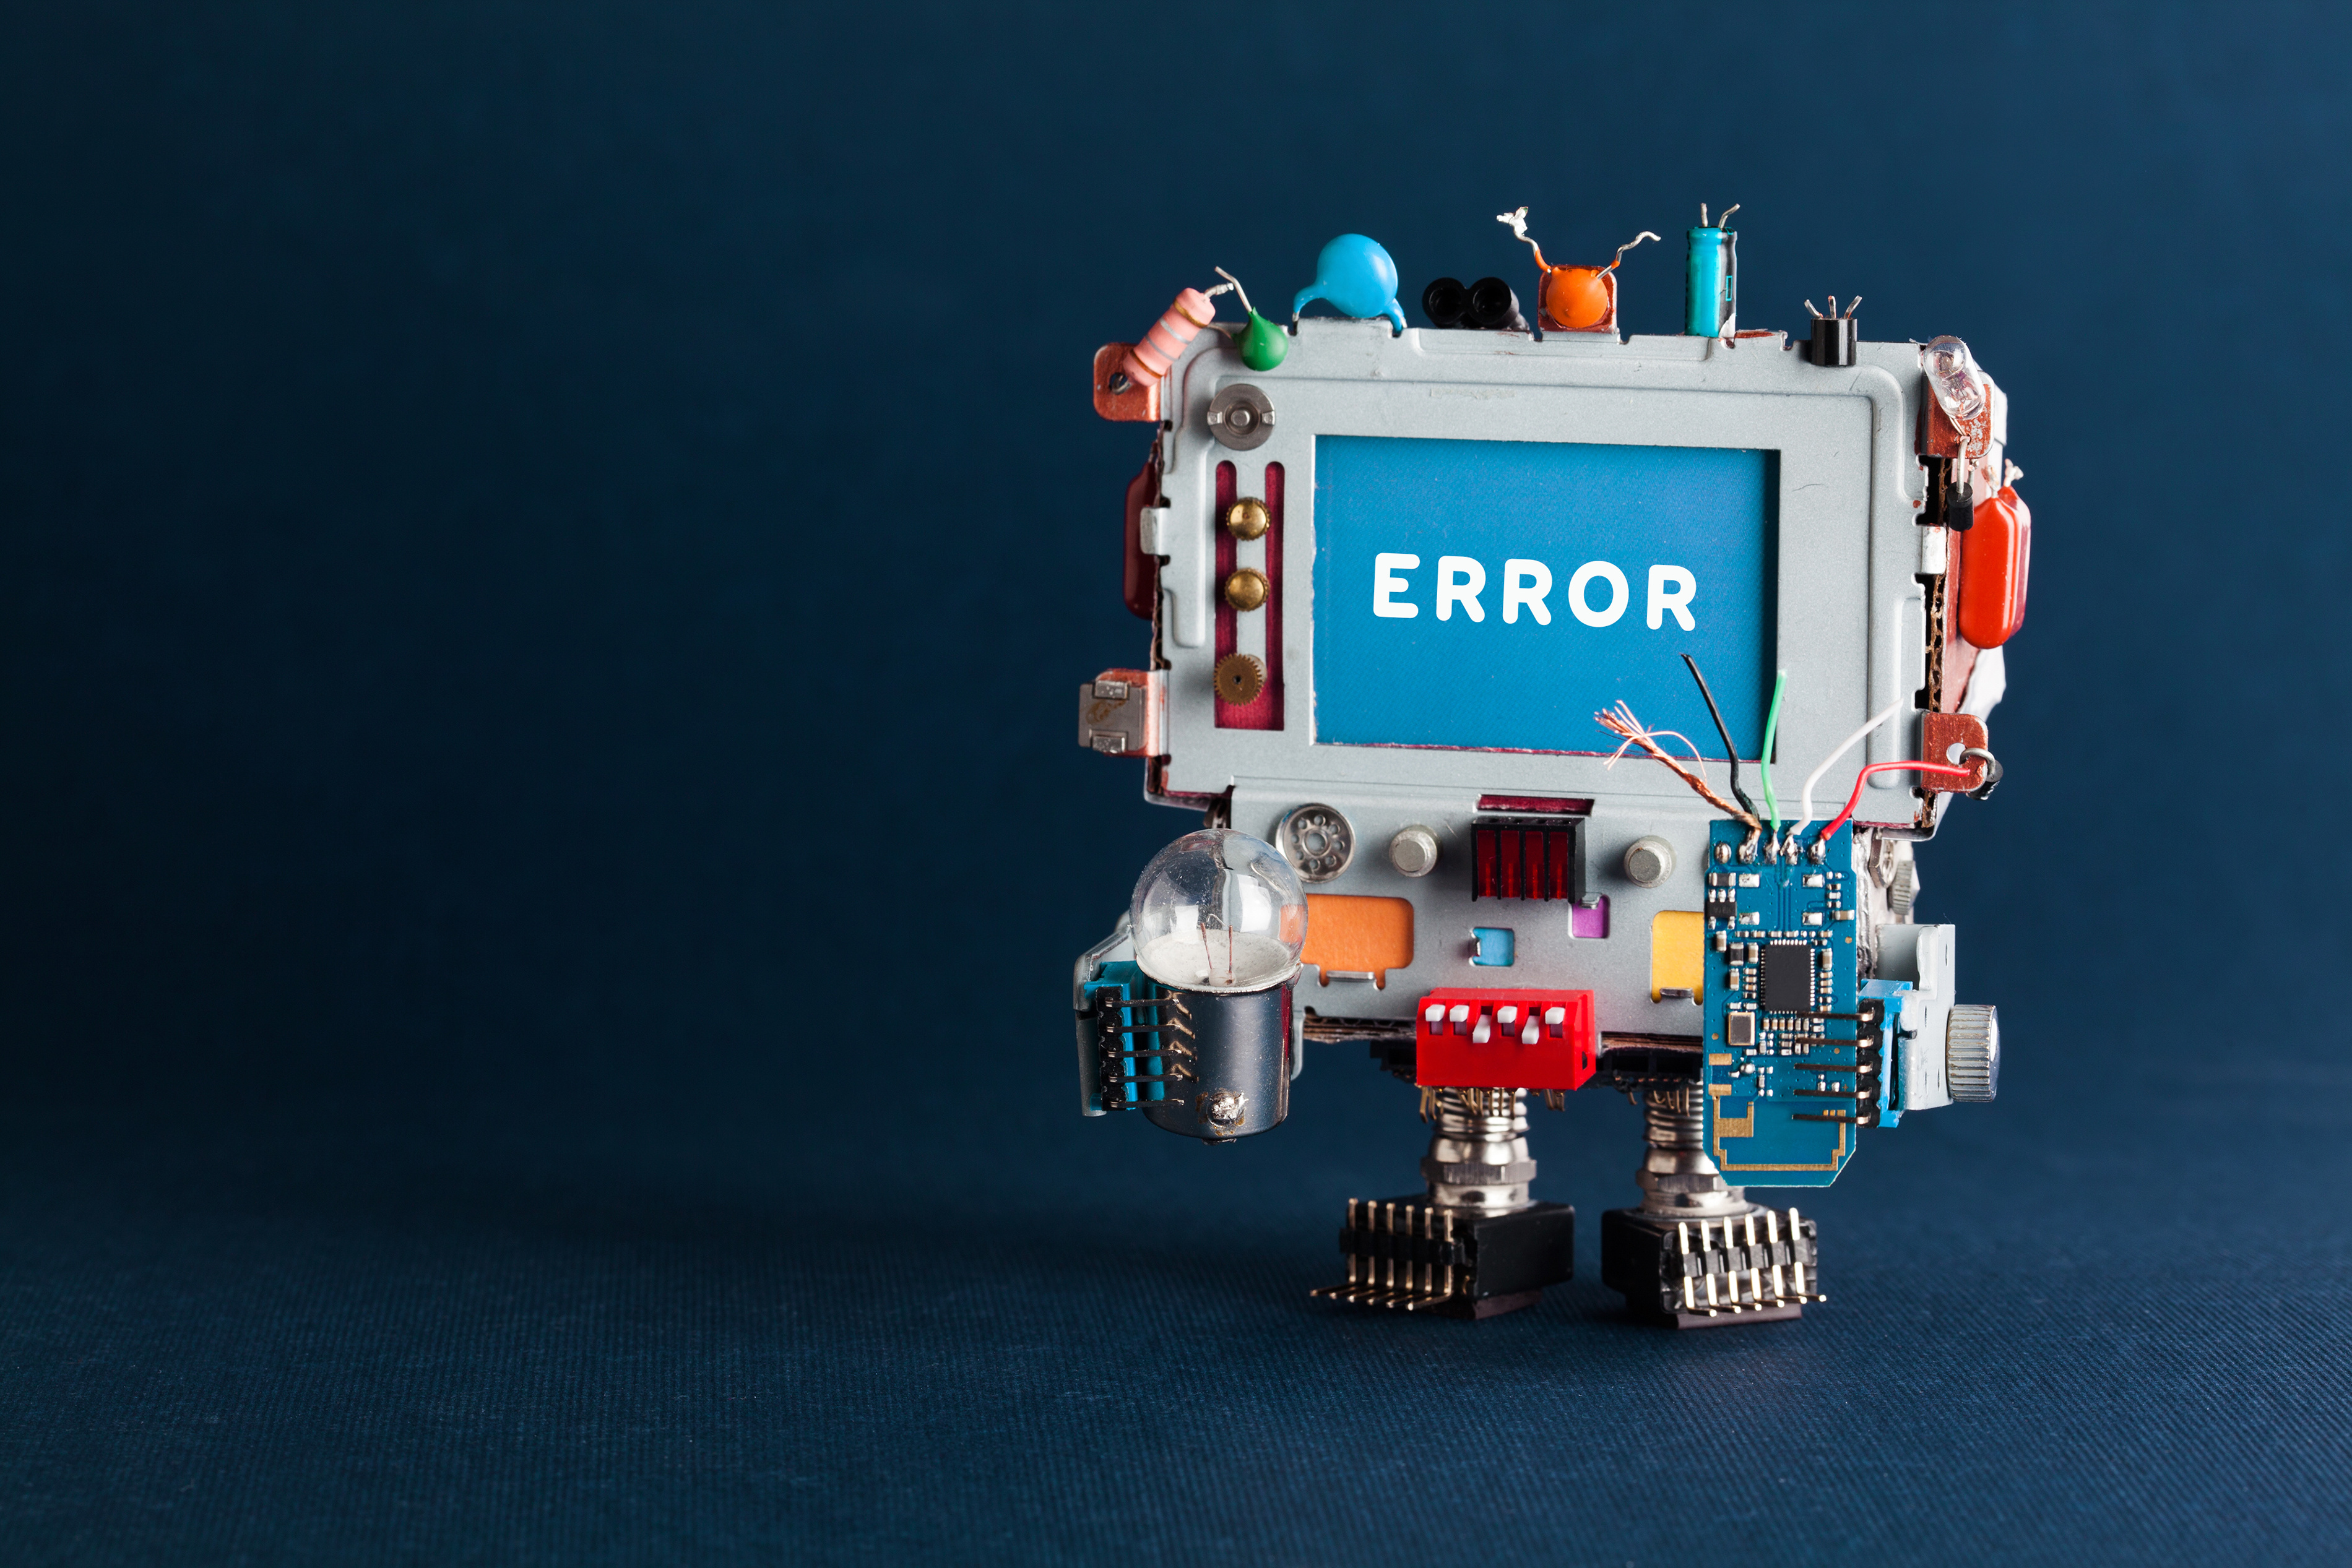 robot error on screen image